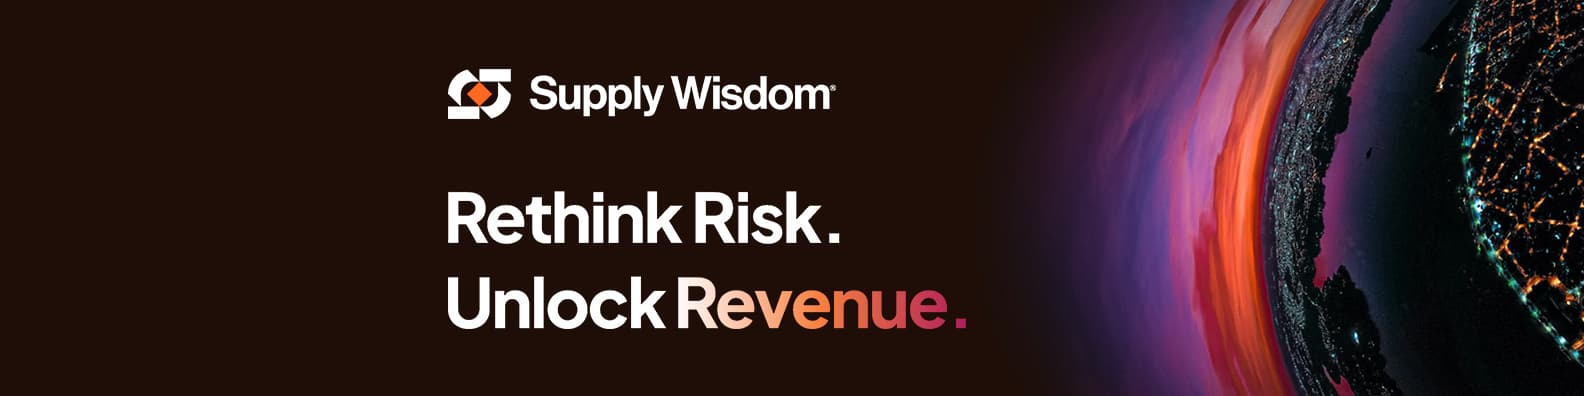 Supply Wisdom cover picture